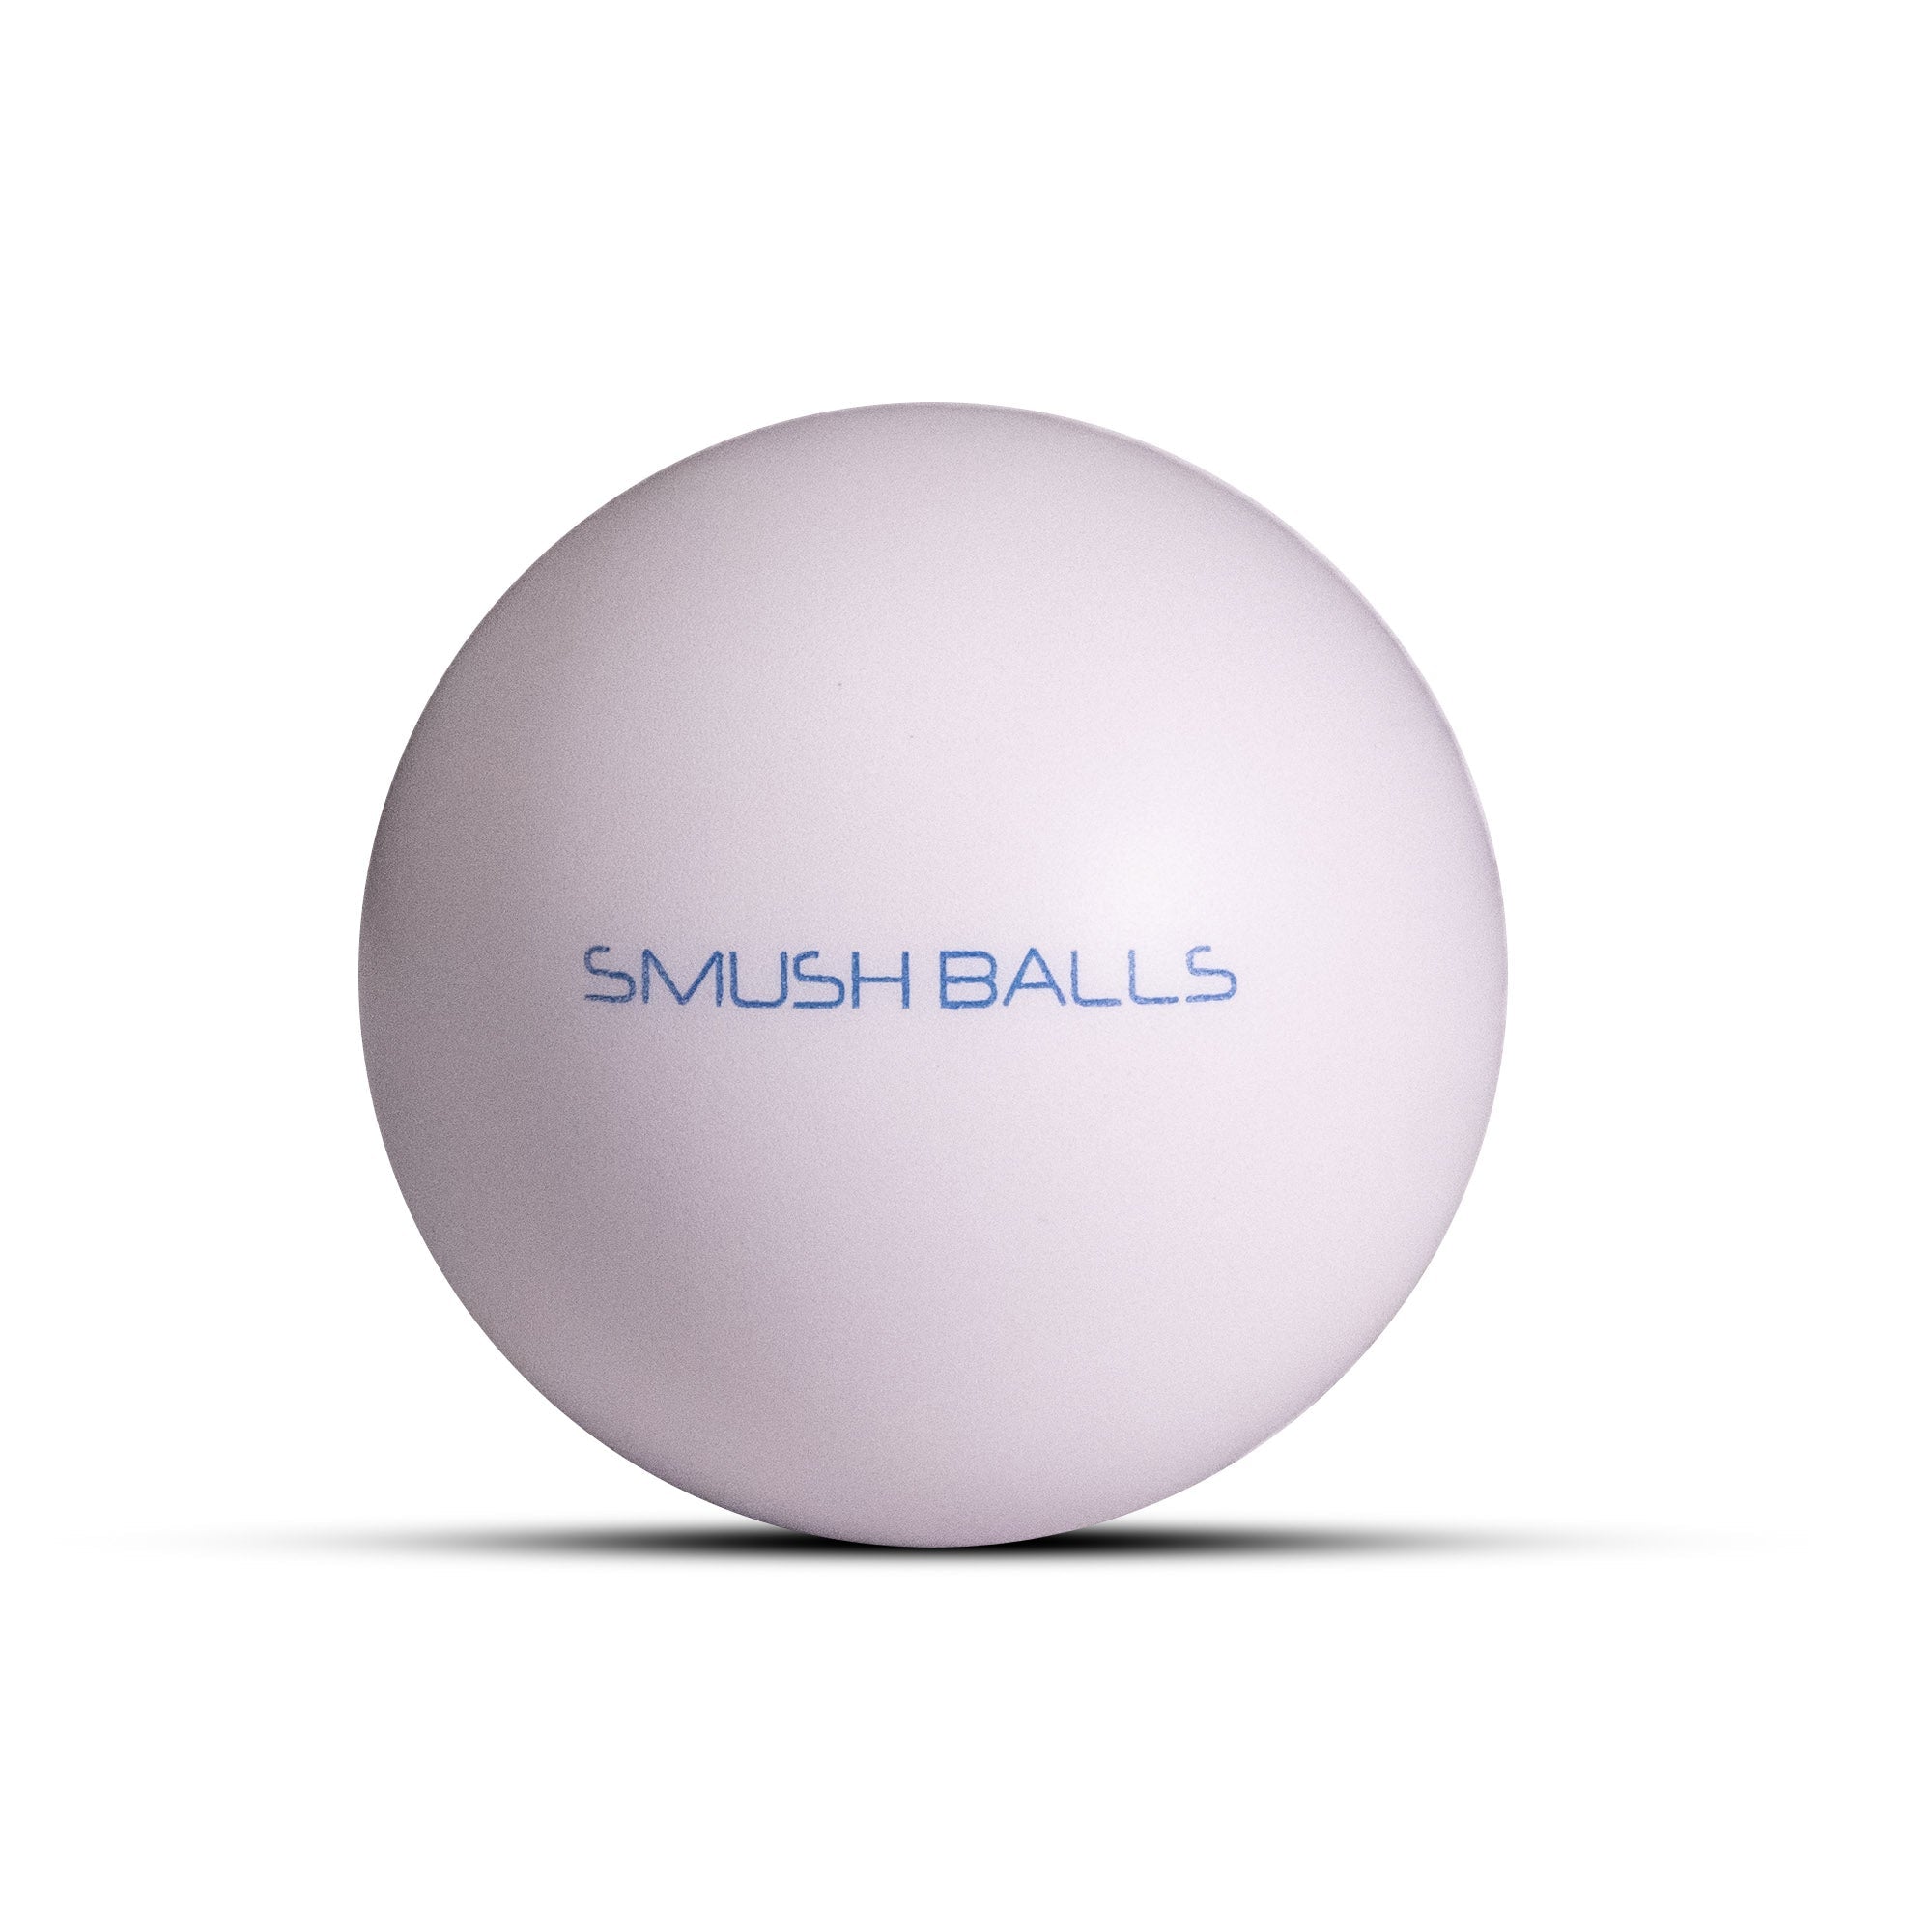 White Smushballs